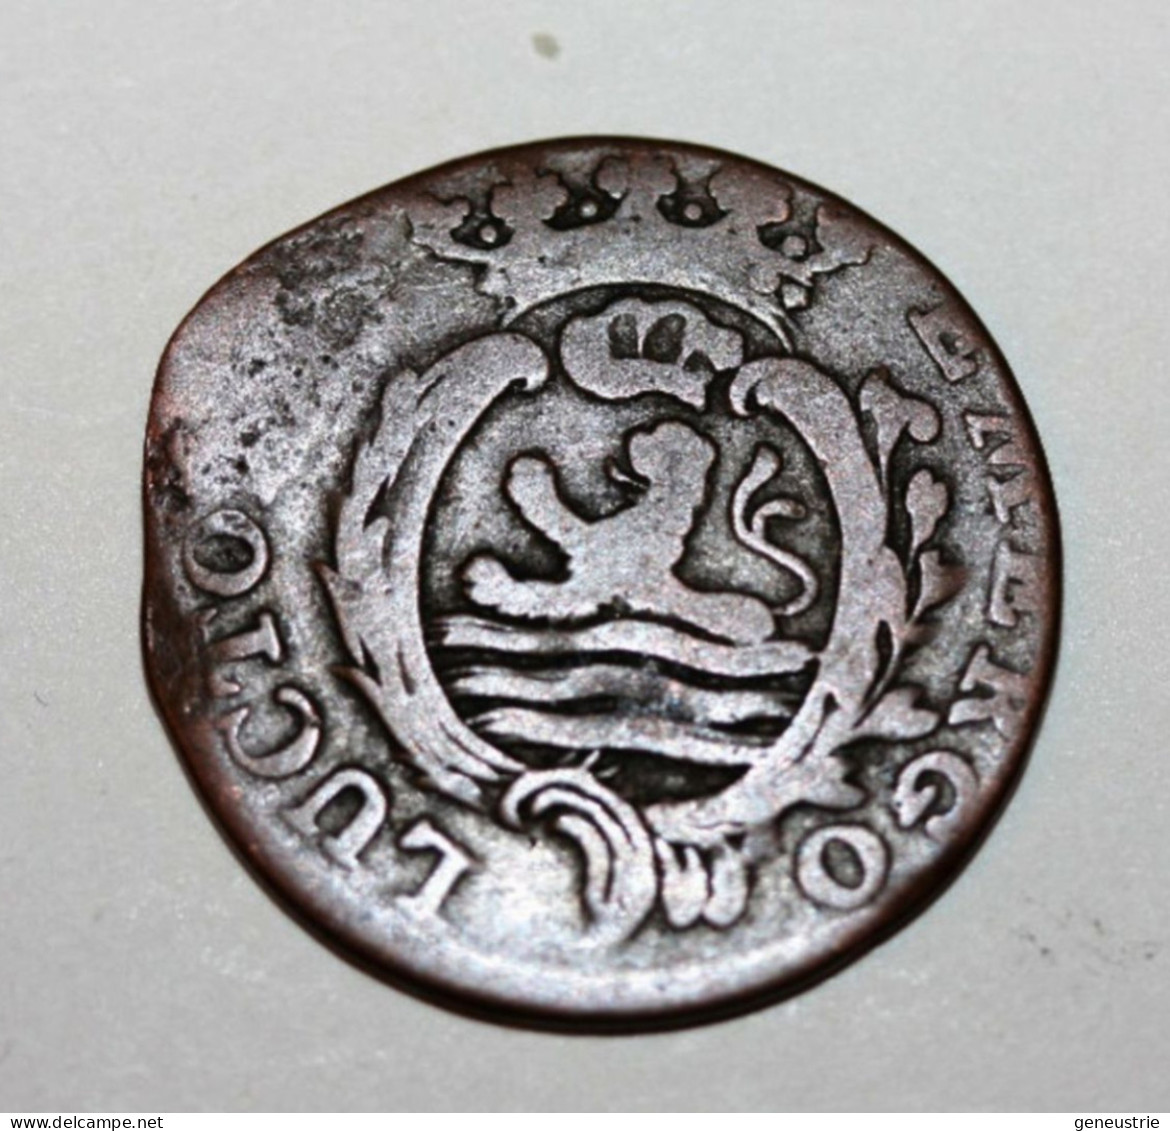 Monnaie De Zelande - Netherlands Repub. - Duit Zelandia 1786 - Pays-Bas - Hollande - …-1795 : Vereinigte Provinzen